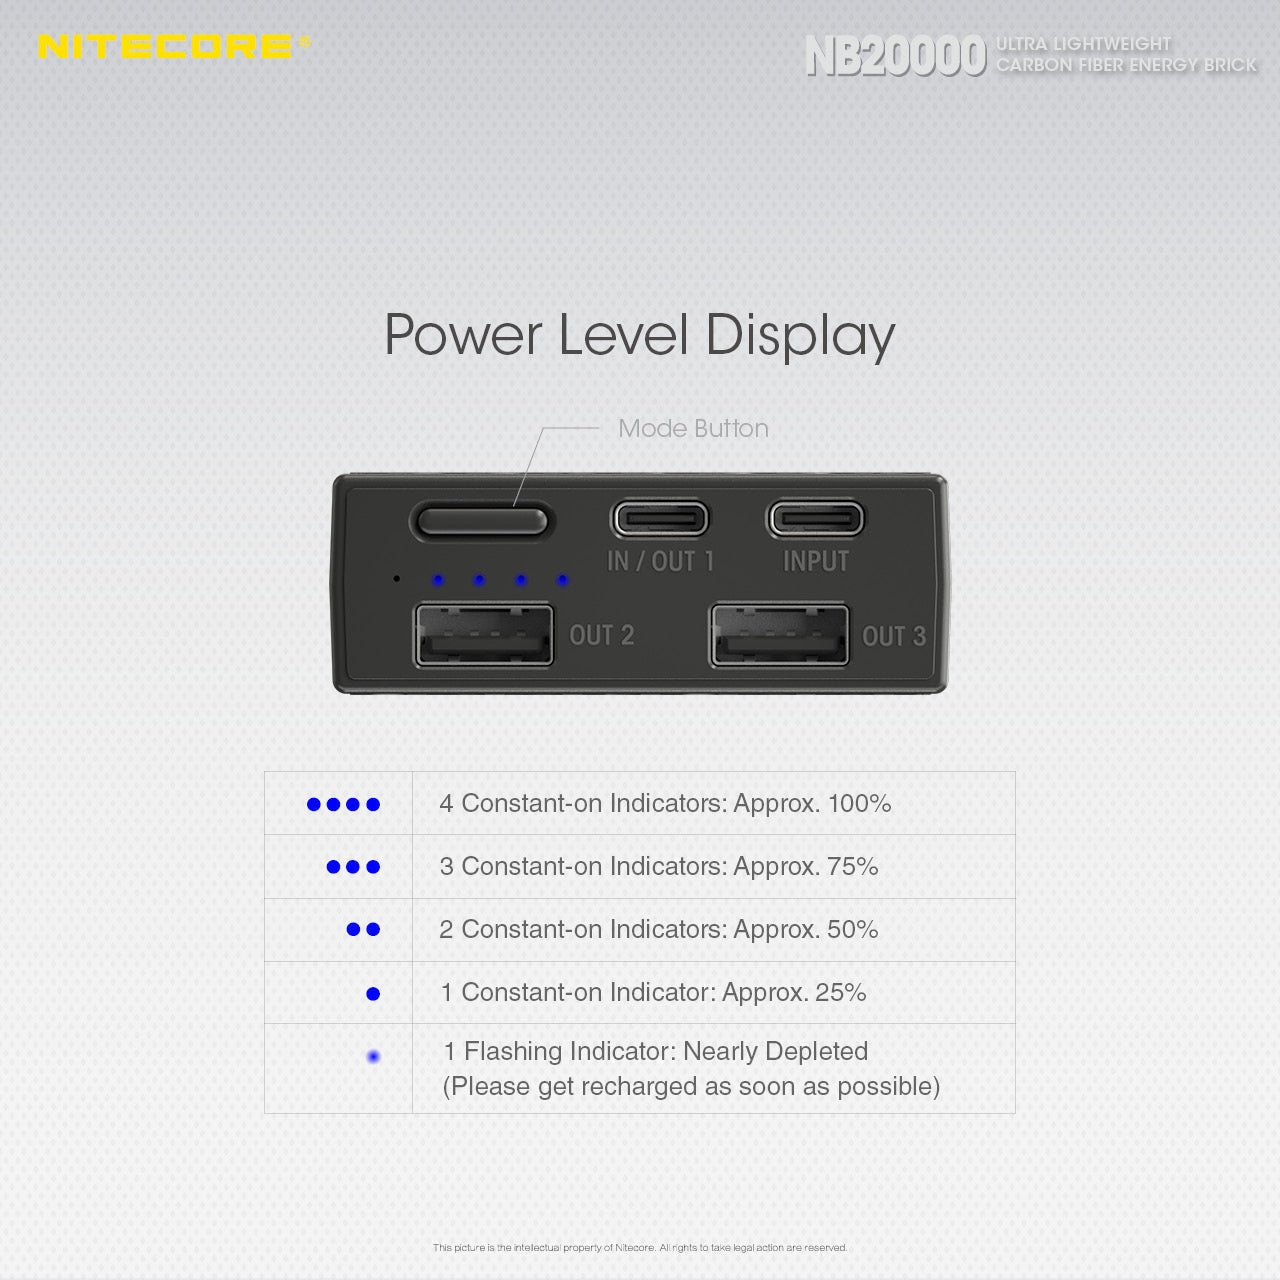 Batteries & Chargers - Nitecore NB20000, QC USB & USB-C 4 Port 20000mAh Power Bank